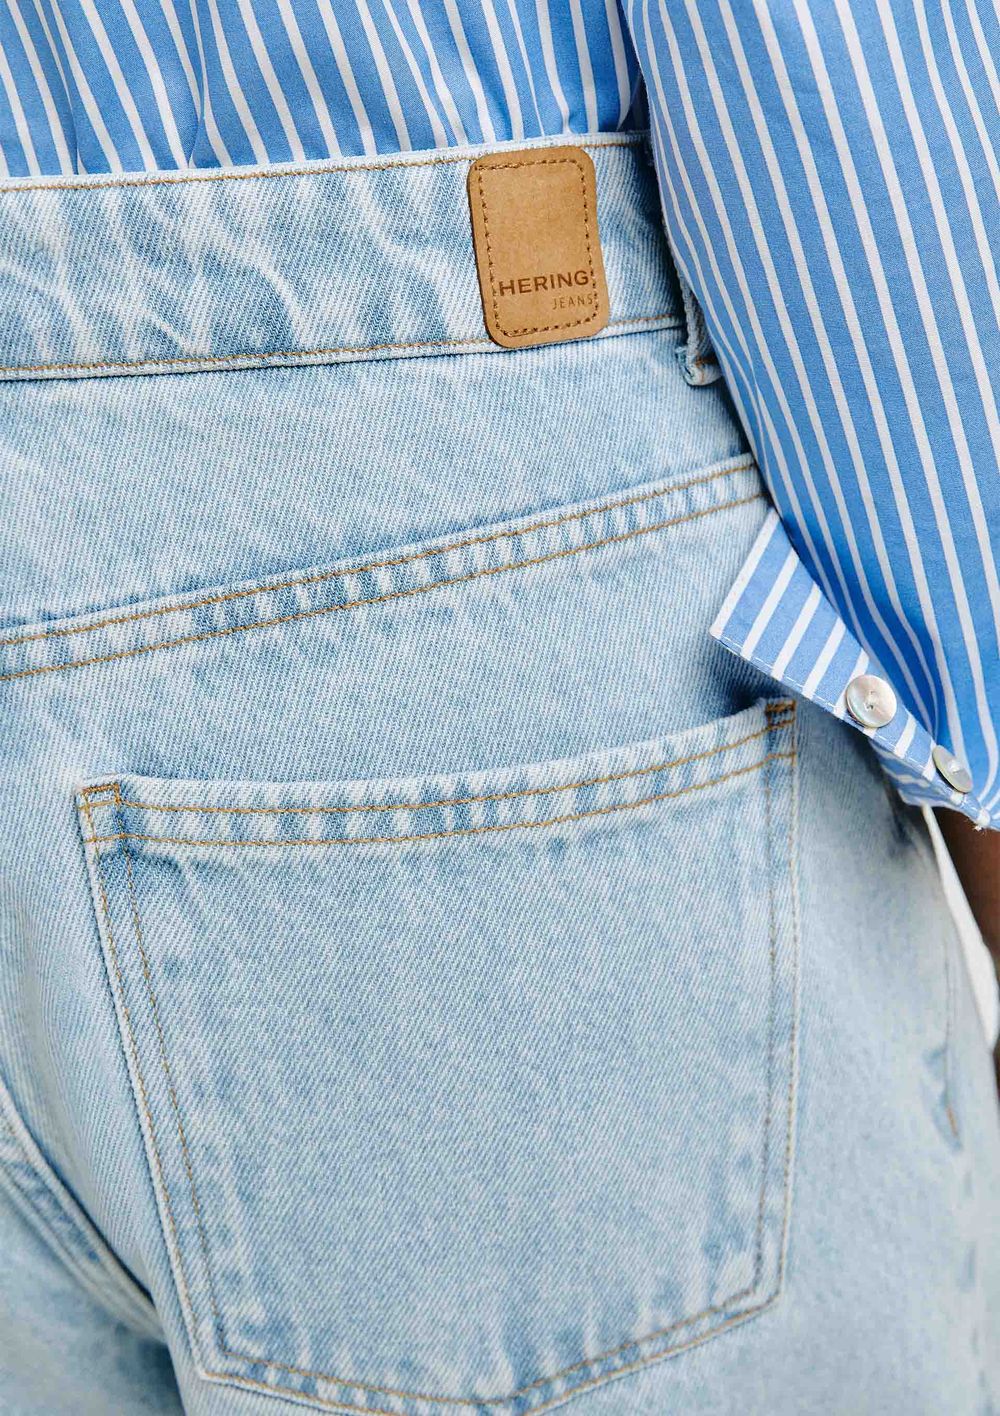 Shorts Jeans Feminino Cintura Alta - Hering Store